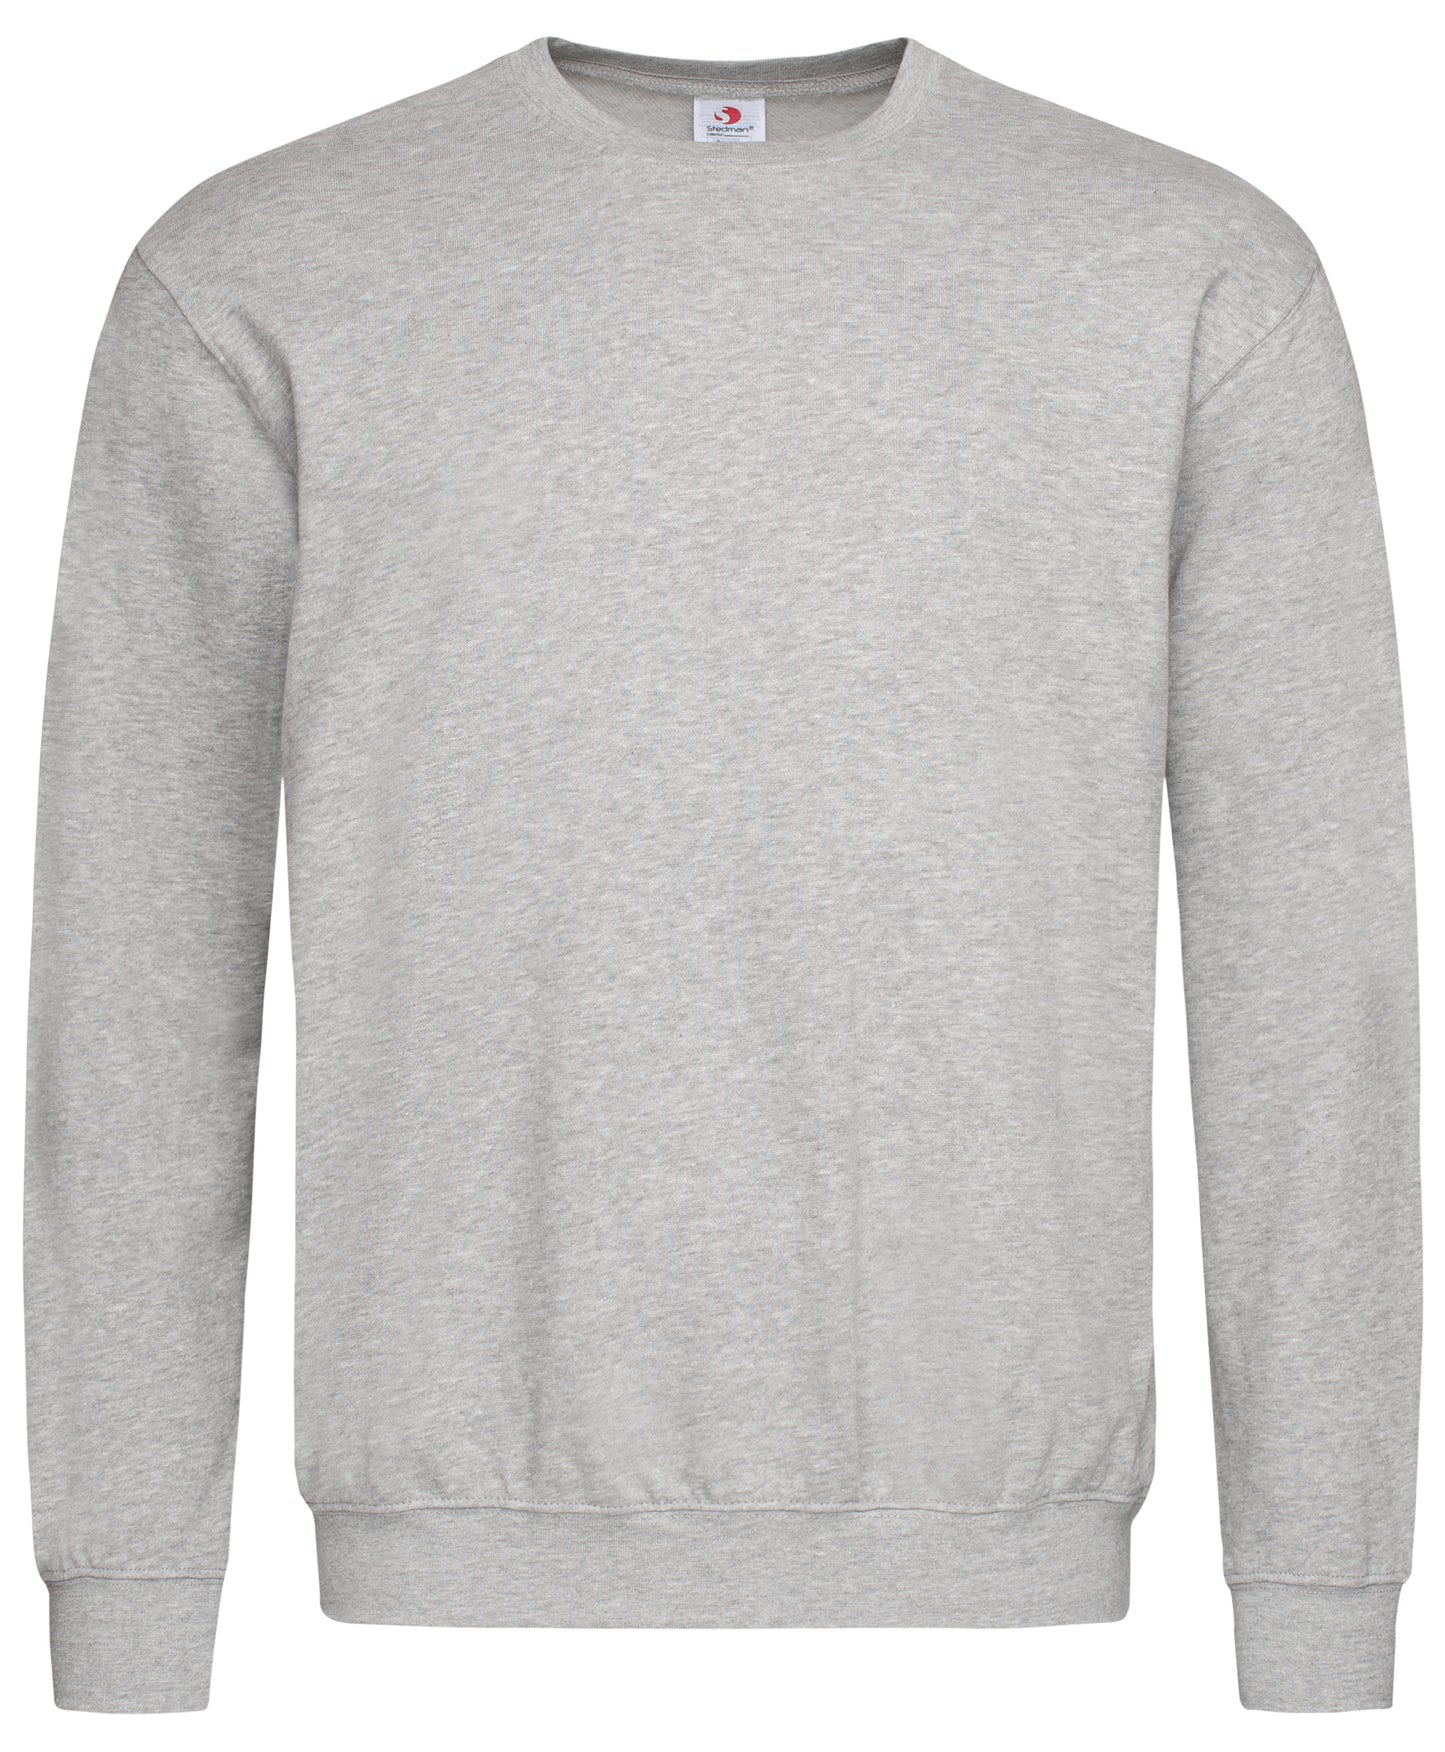 Stedman ST4000 Sweatshirt